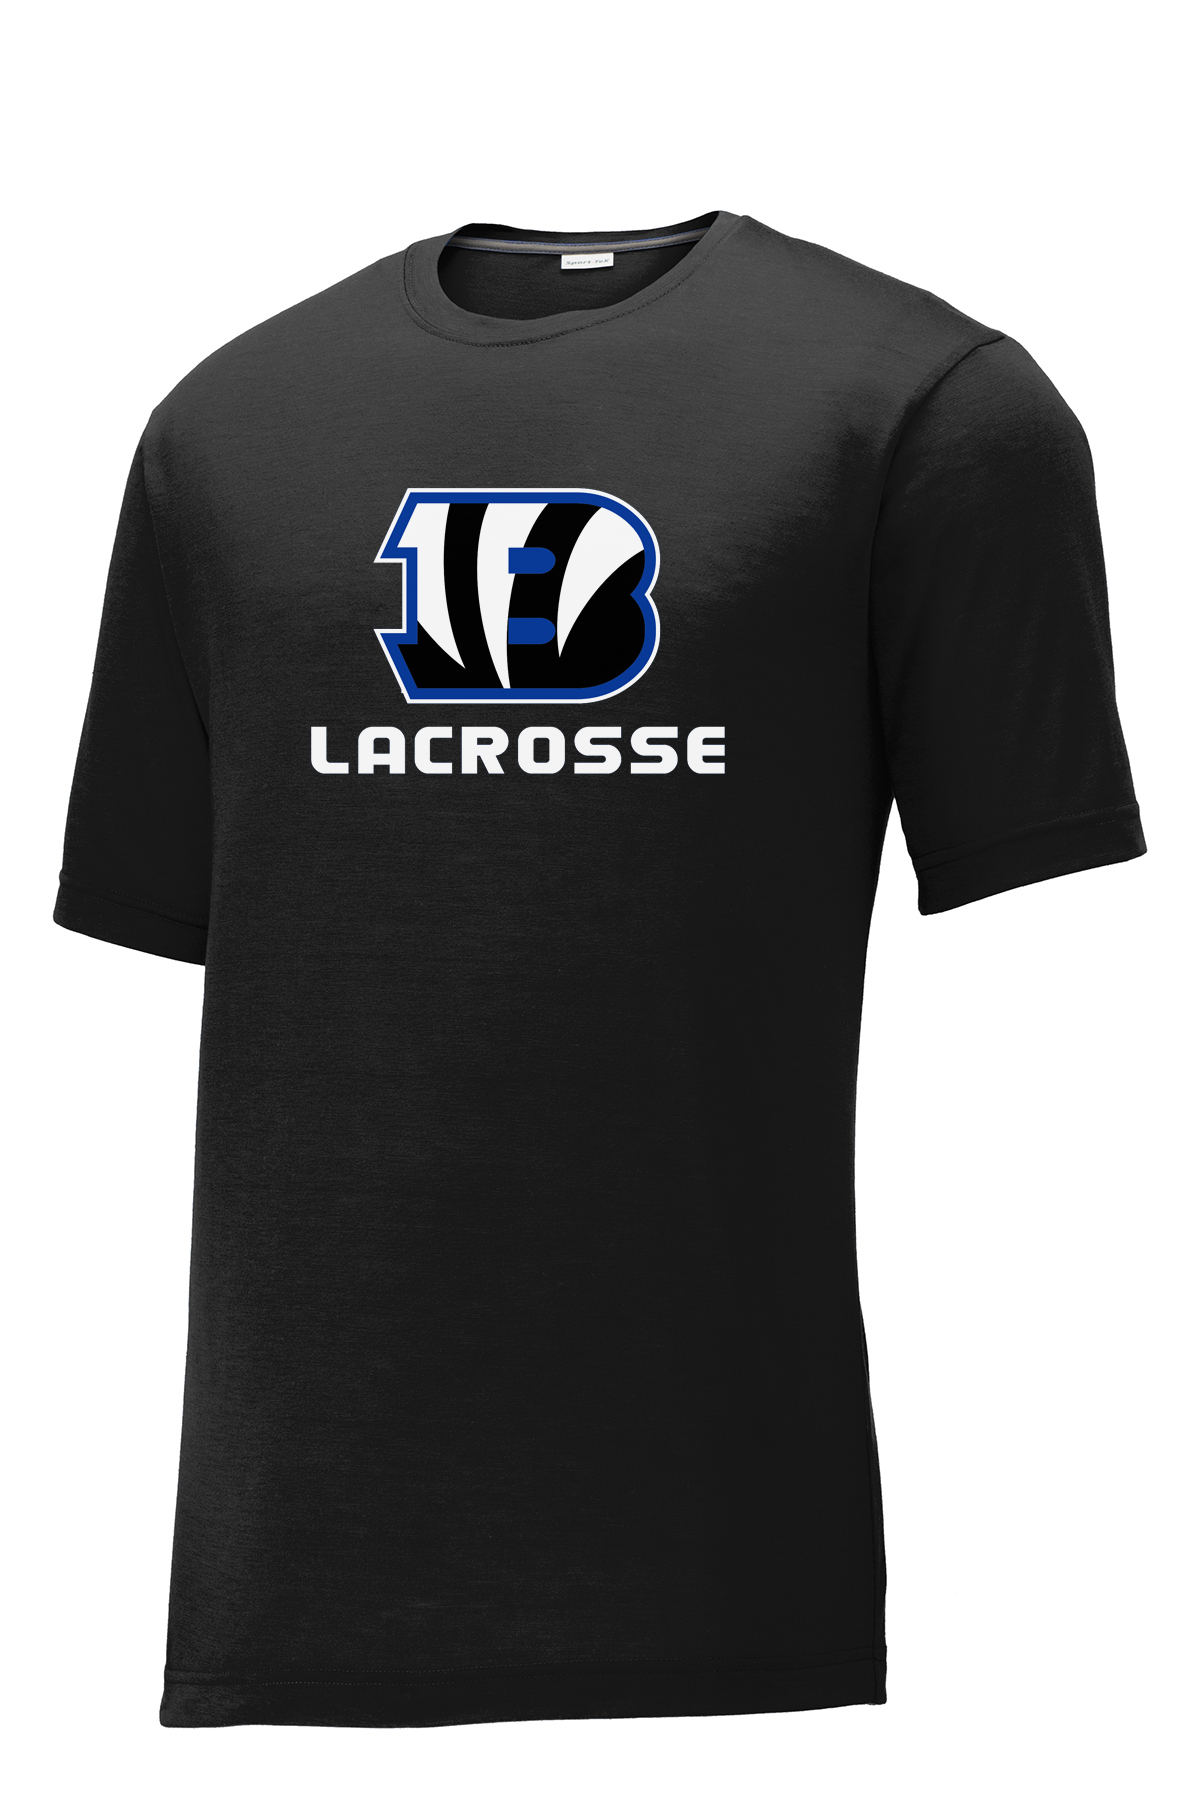 Blake Lacrosse Logo CottonTouch Performance T-Shirt